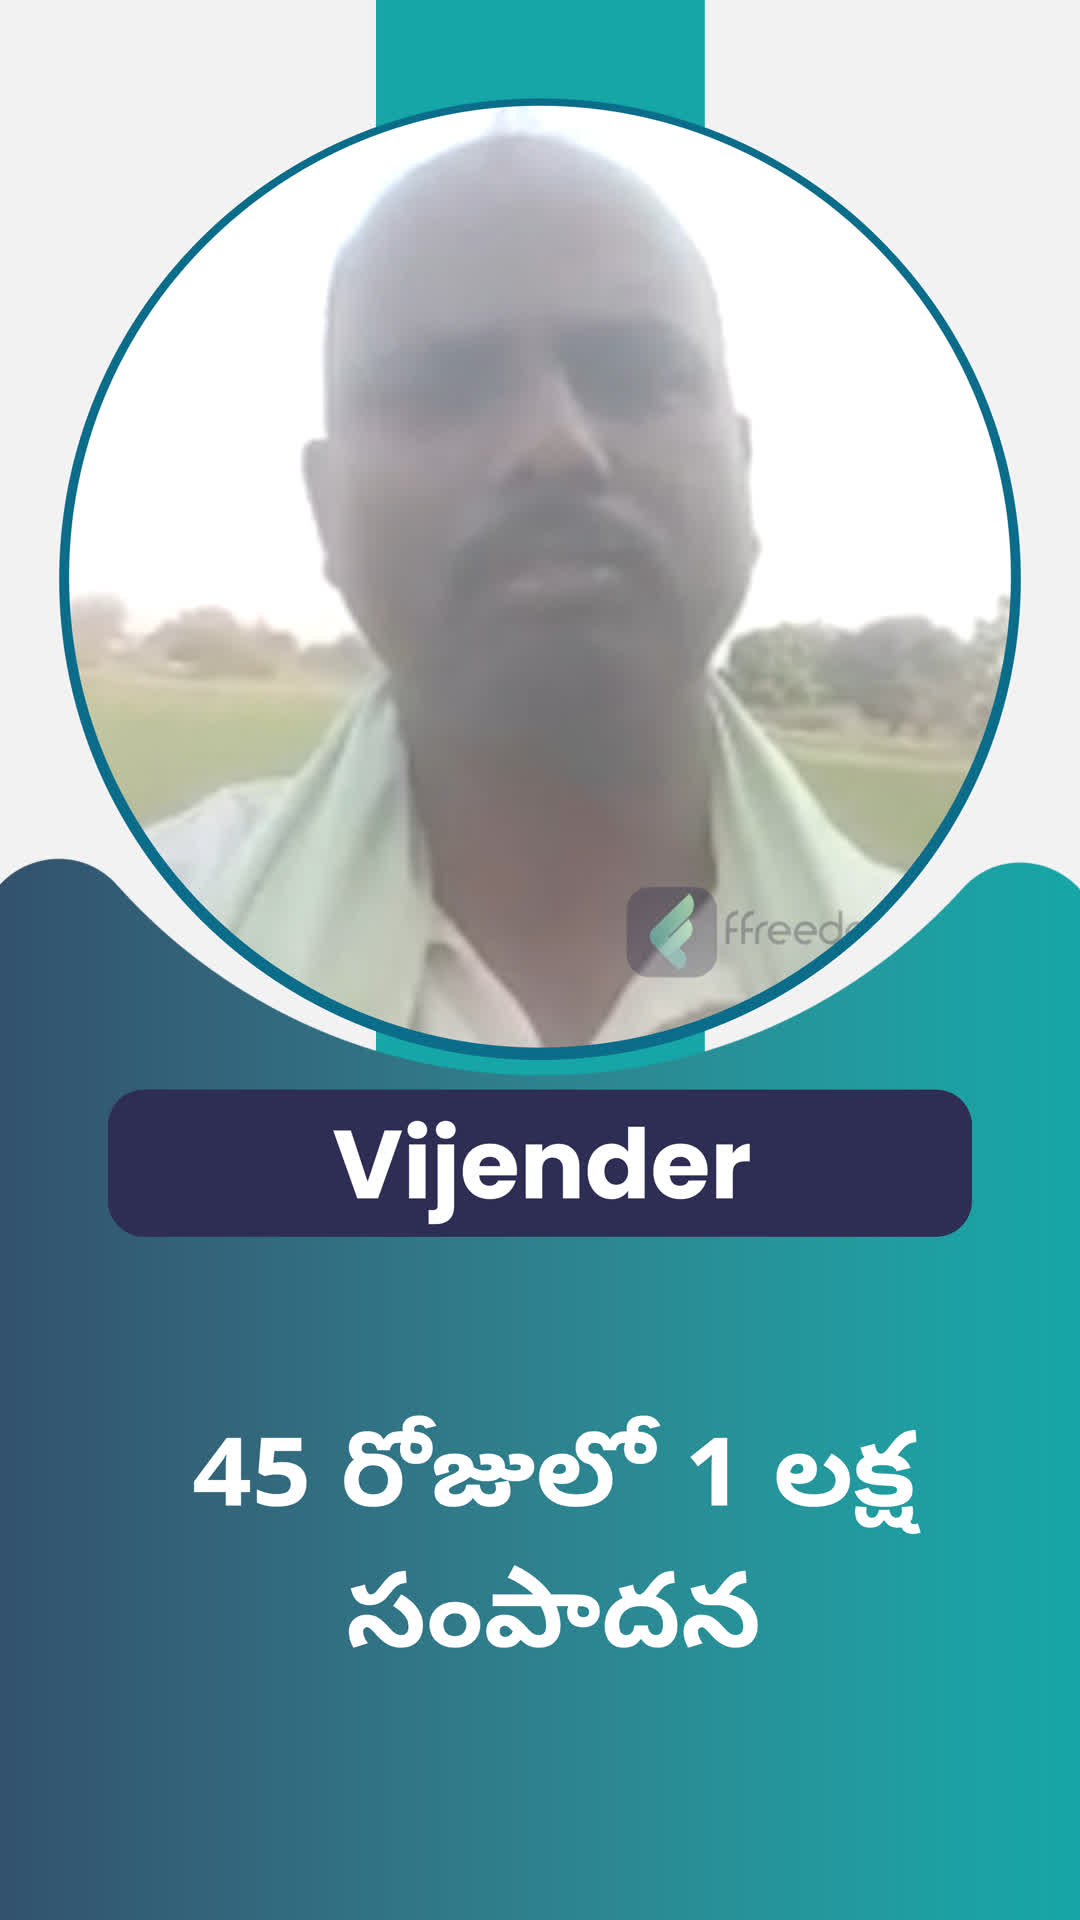 vijendar's Honest Review of ffreedom app - Hyderabad ,Andhra Pradesh